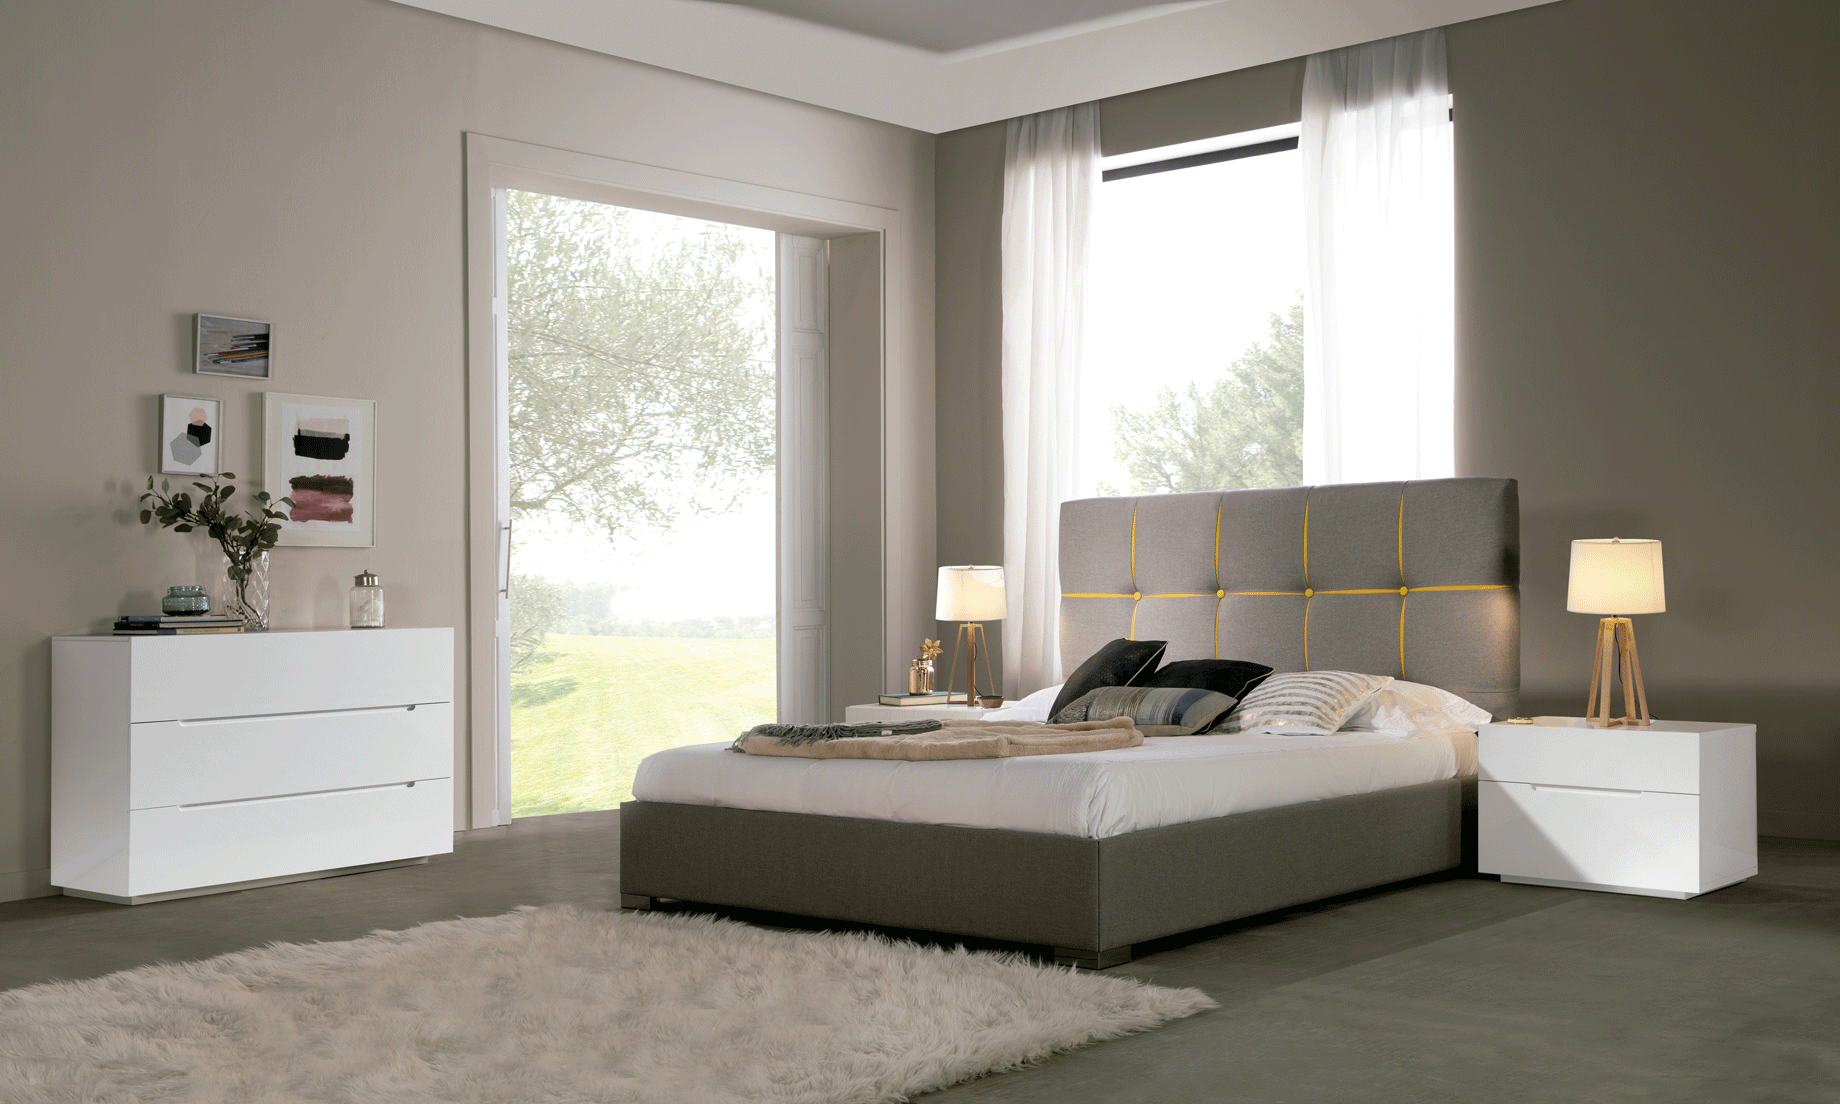 Brands Franco AZKARY II CONSOLES, Spain Veronica Bedroom with Storage, M100, C100, E100